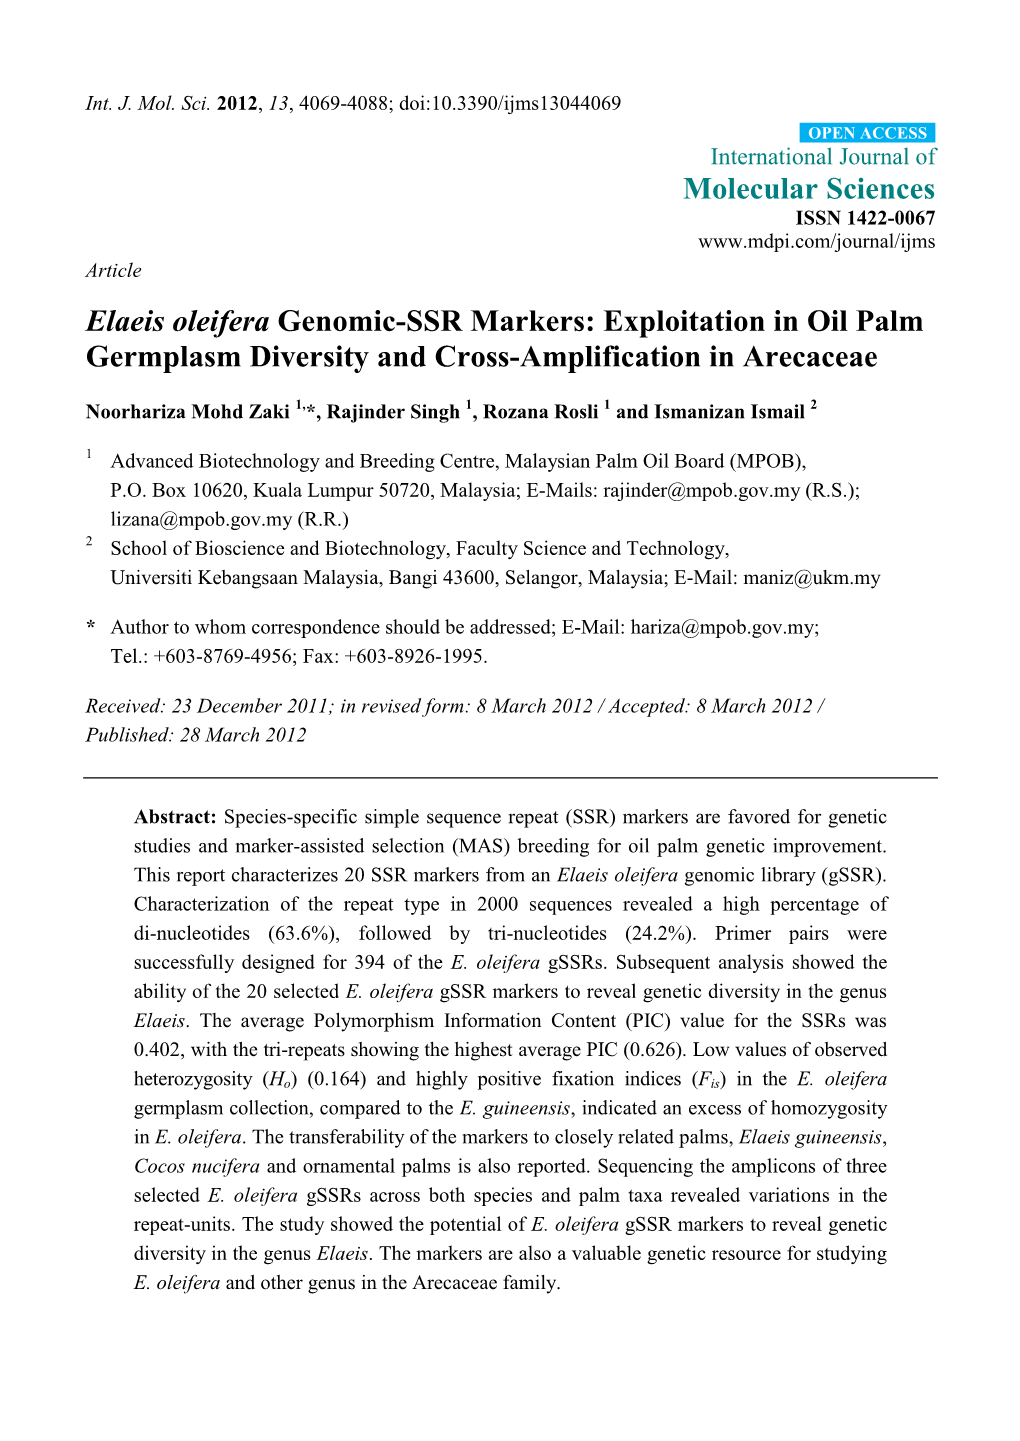 Elaeis Oleifera Genomic-SSR Markers: Exploitation in Oil Palm Germplasm Diversity and Cross-Amplification in Arecaceae